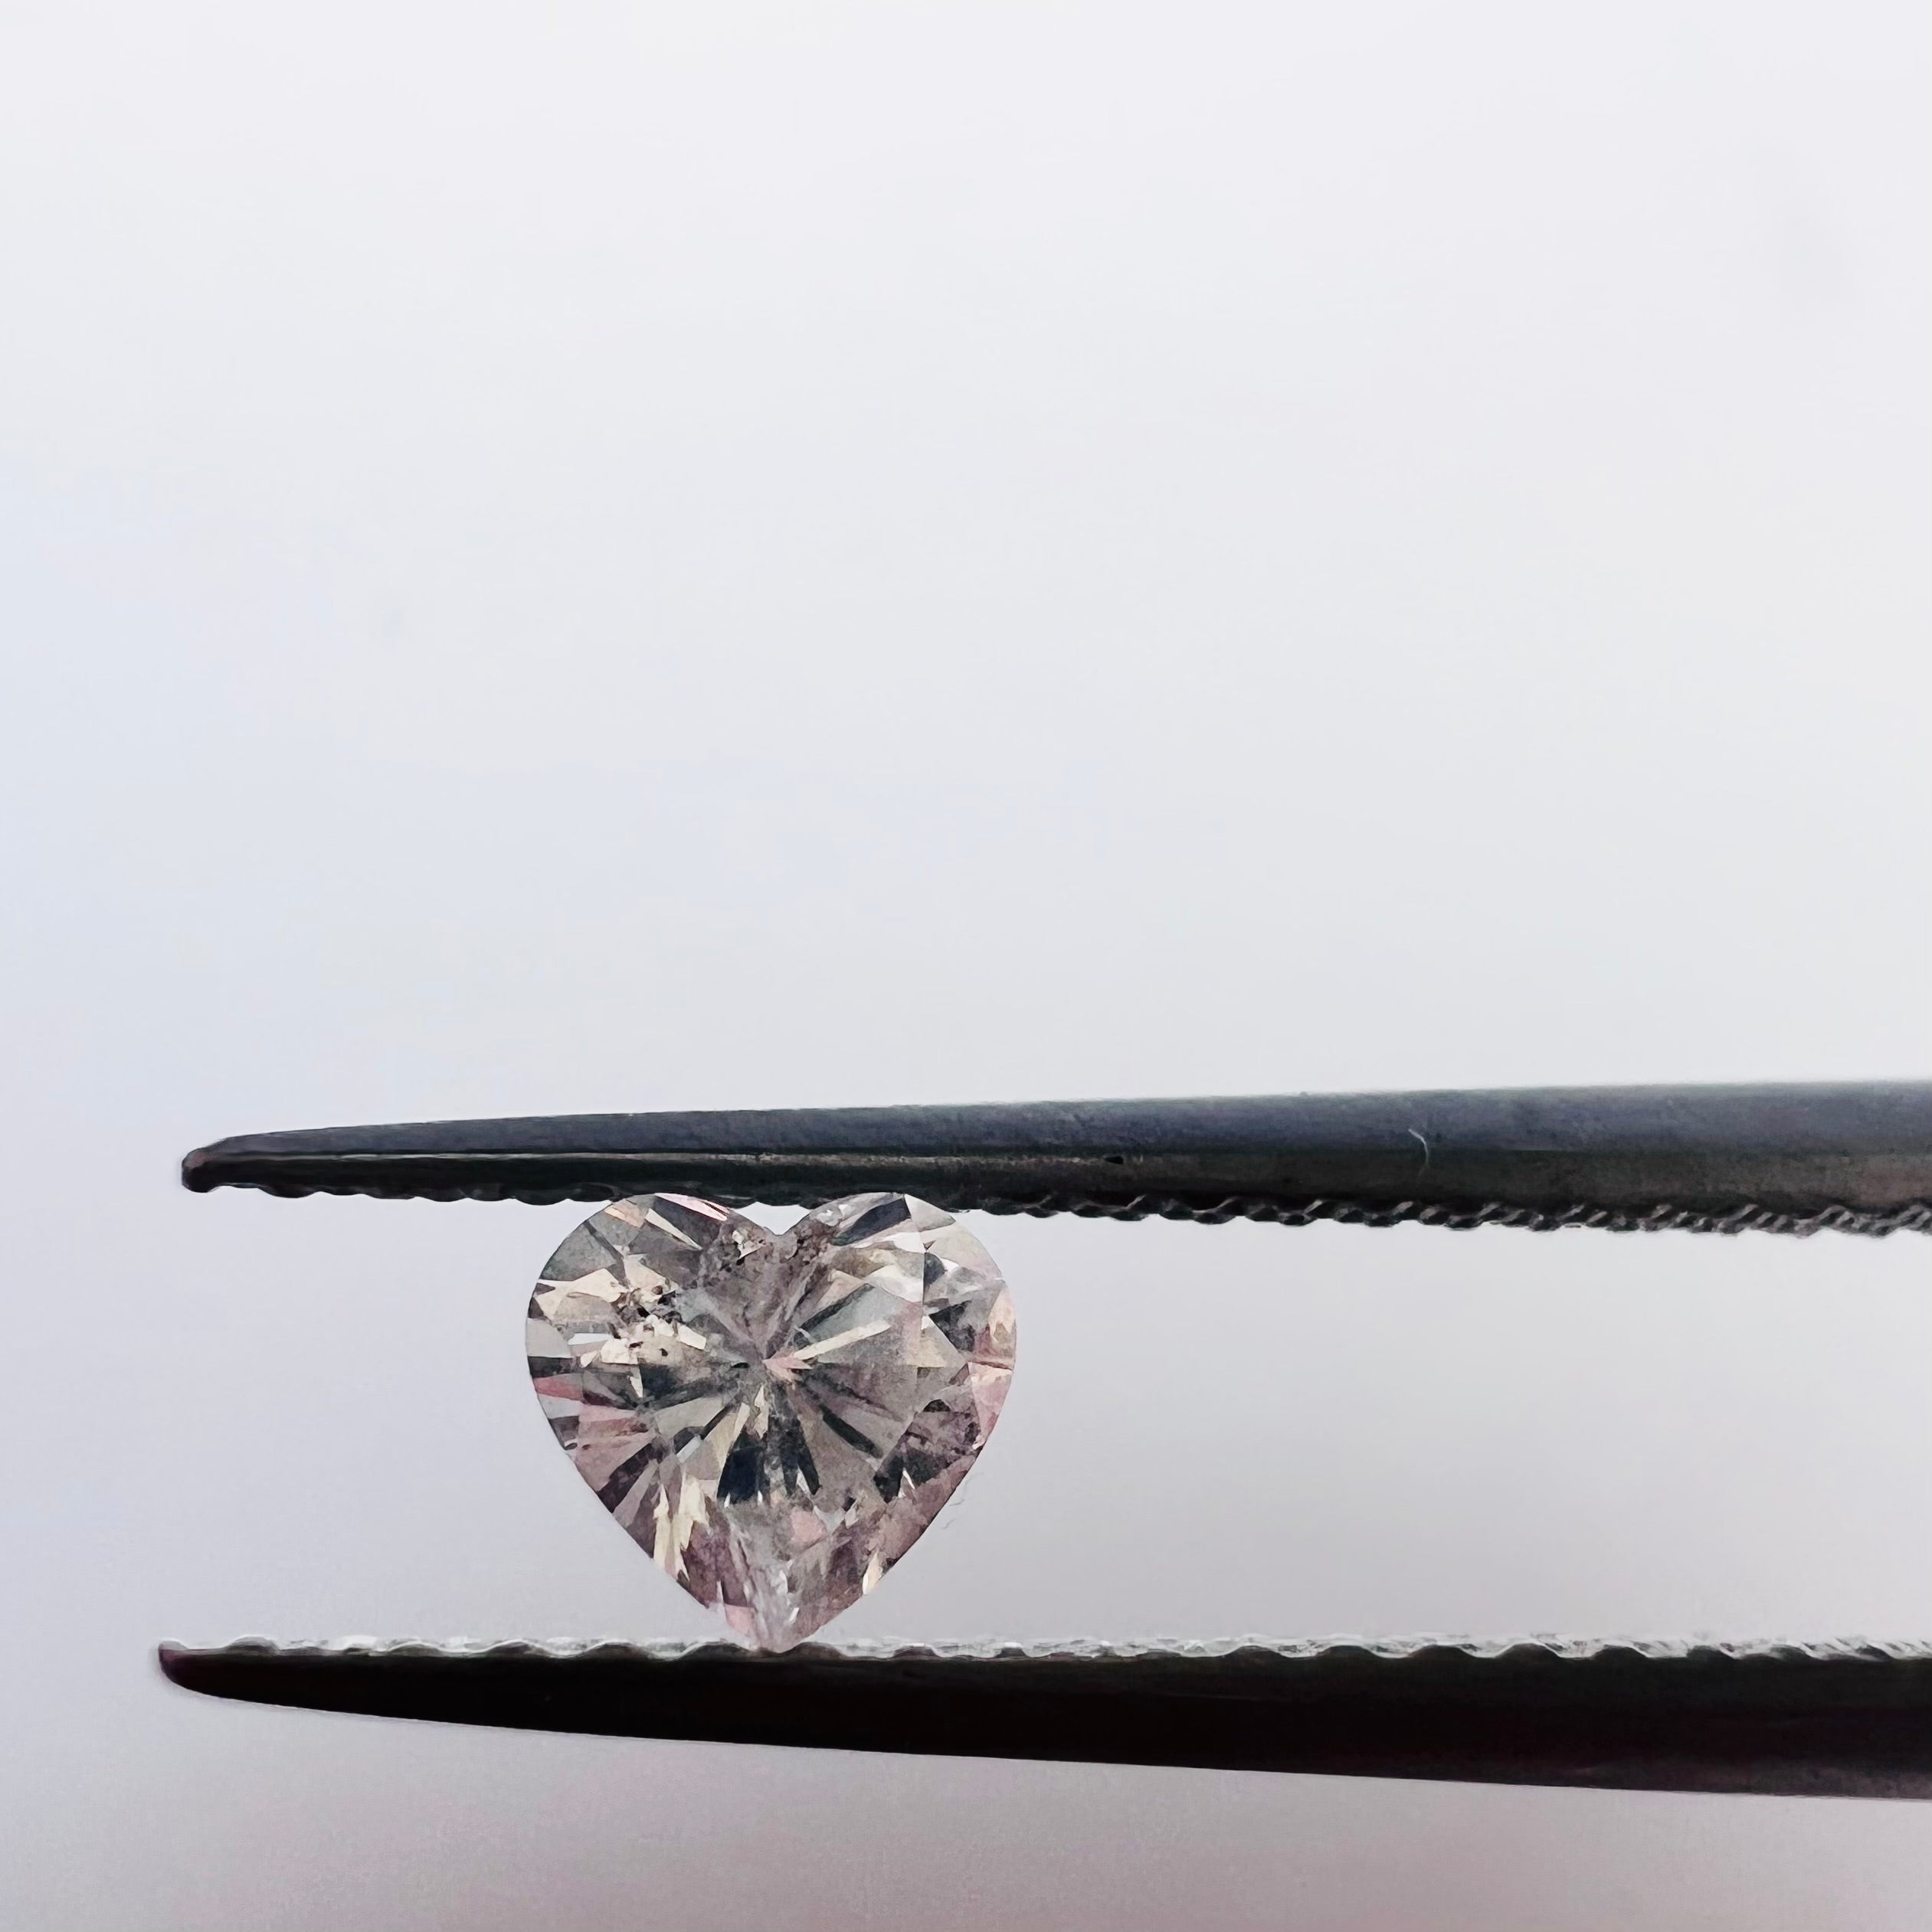 .25CT Heart Shape Diamond G I1 4.25x3.95x2.42mm Natural Earth mined